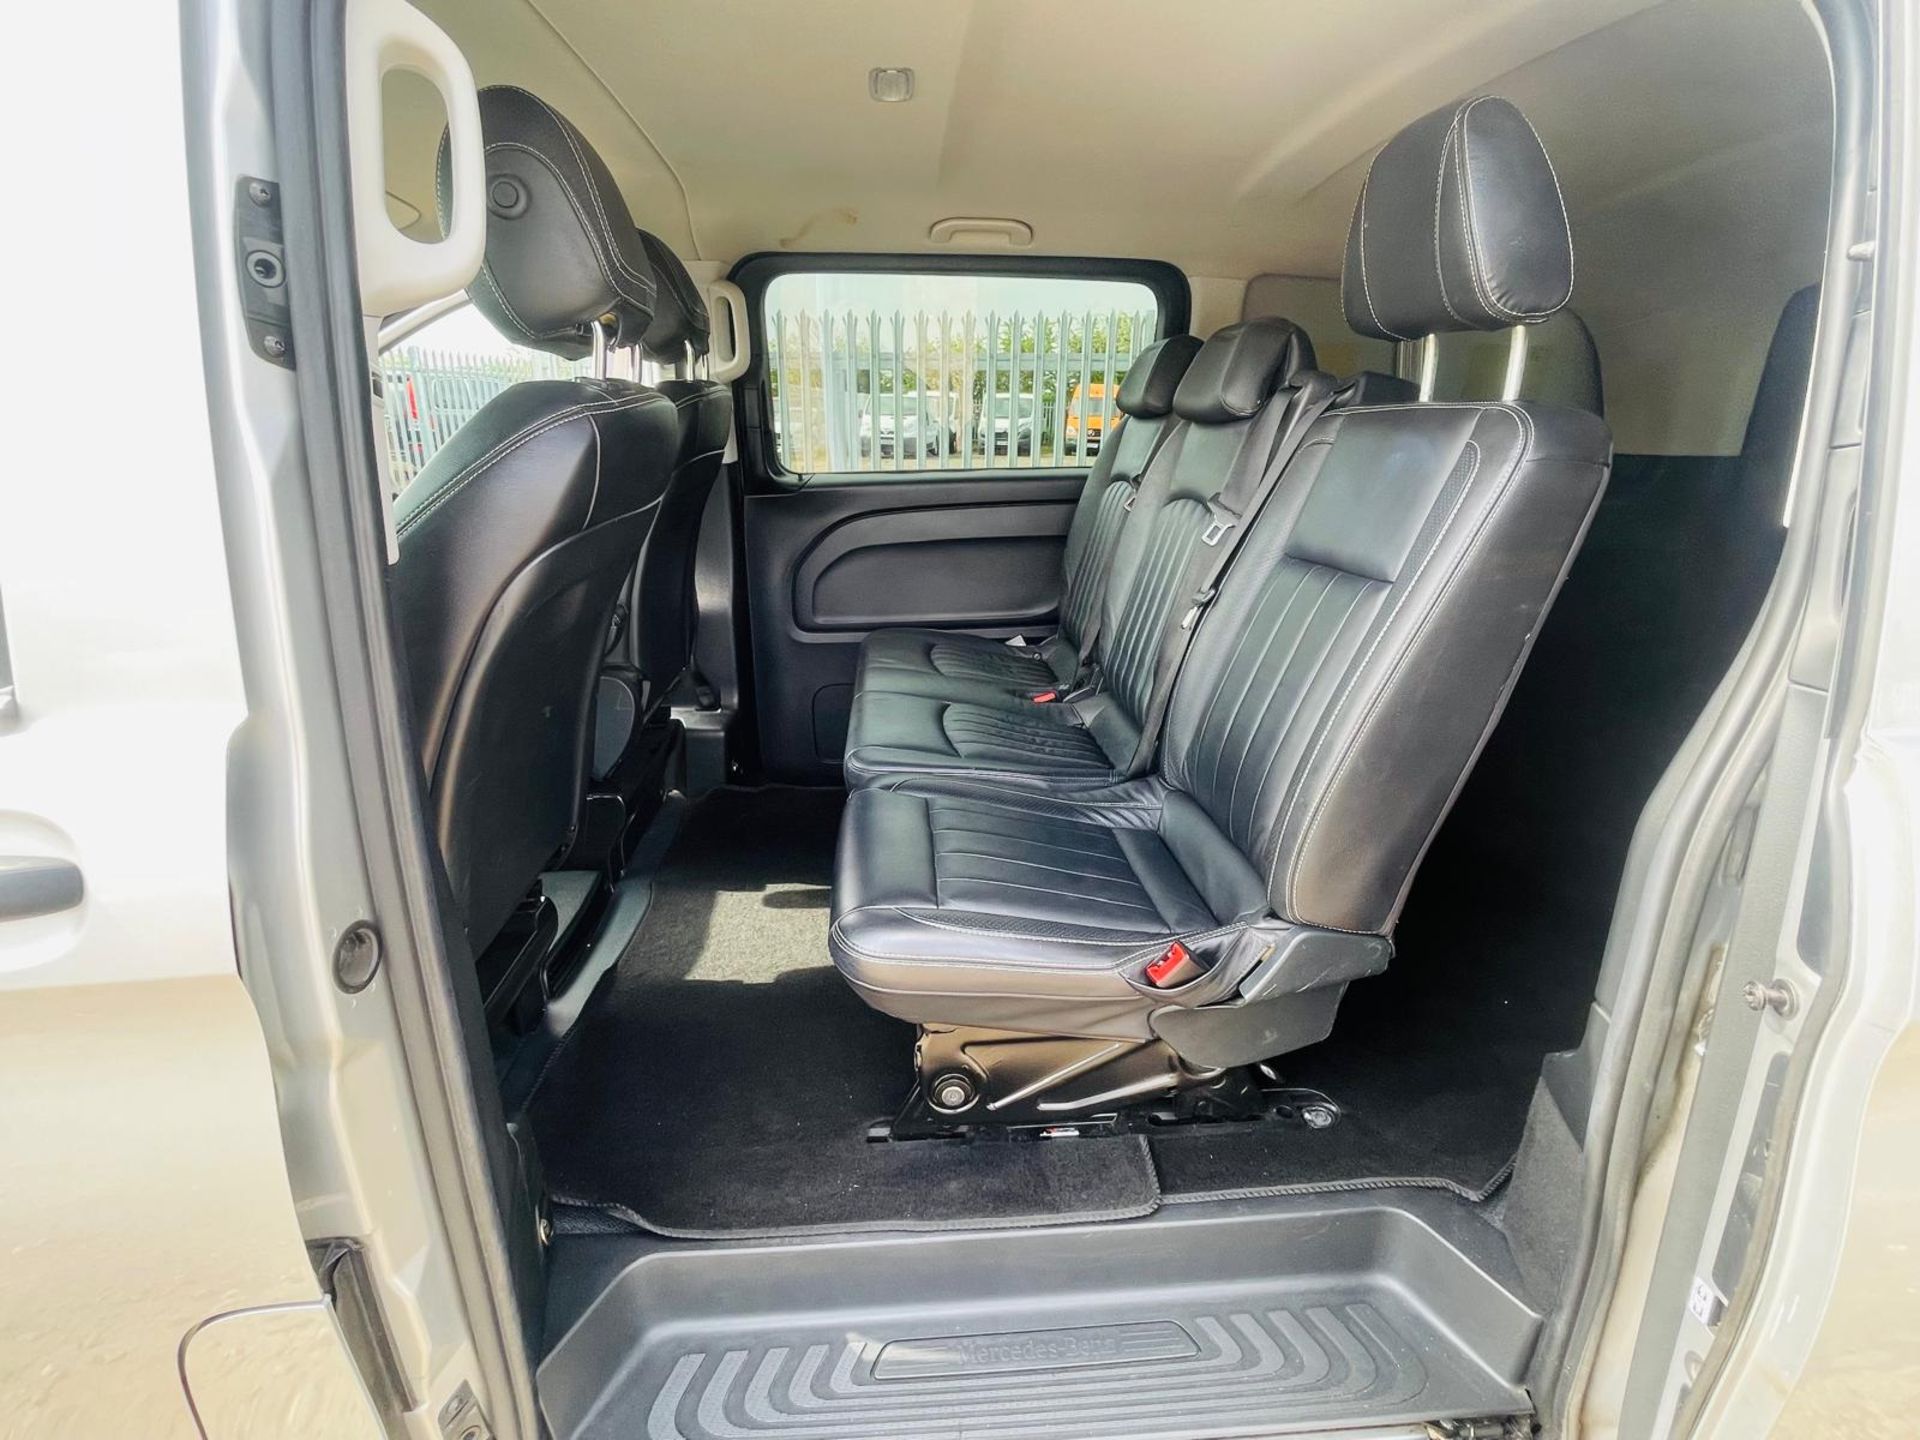 Mercedes-Benz Vito Premium 2.1 119 CDI 7G Tronic Crew Cab LWB Automatic 2019'19 Reg'- Alloy Wheels - Image 29 of 31